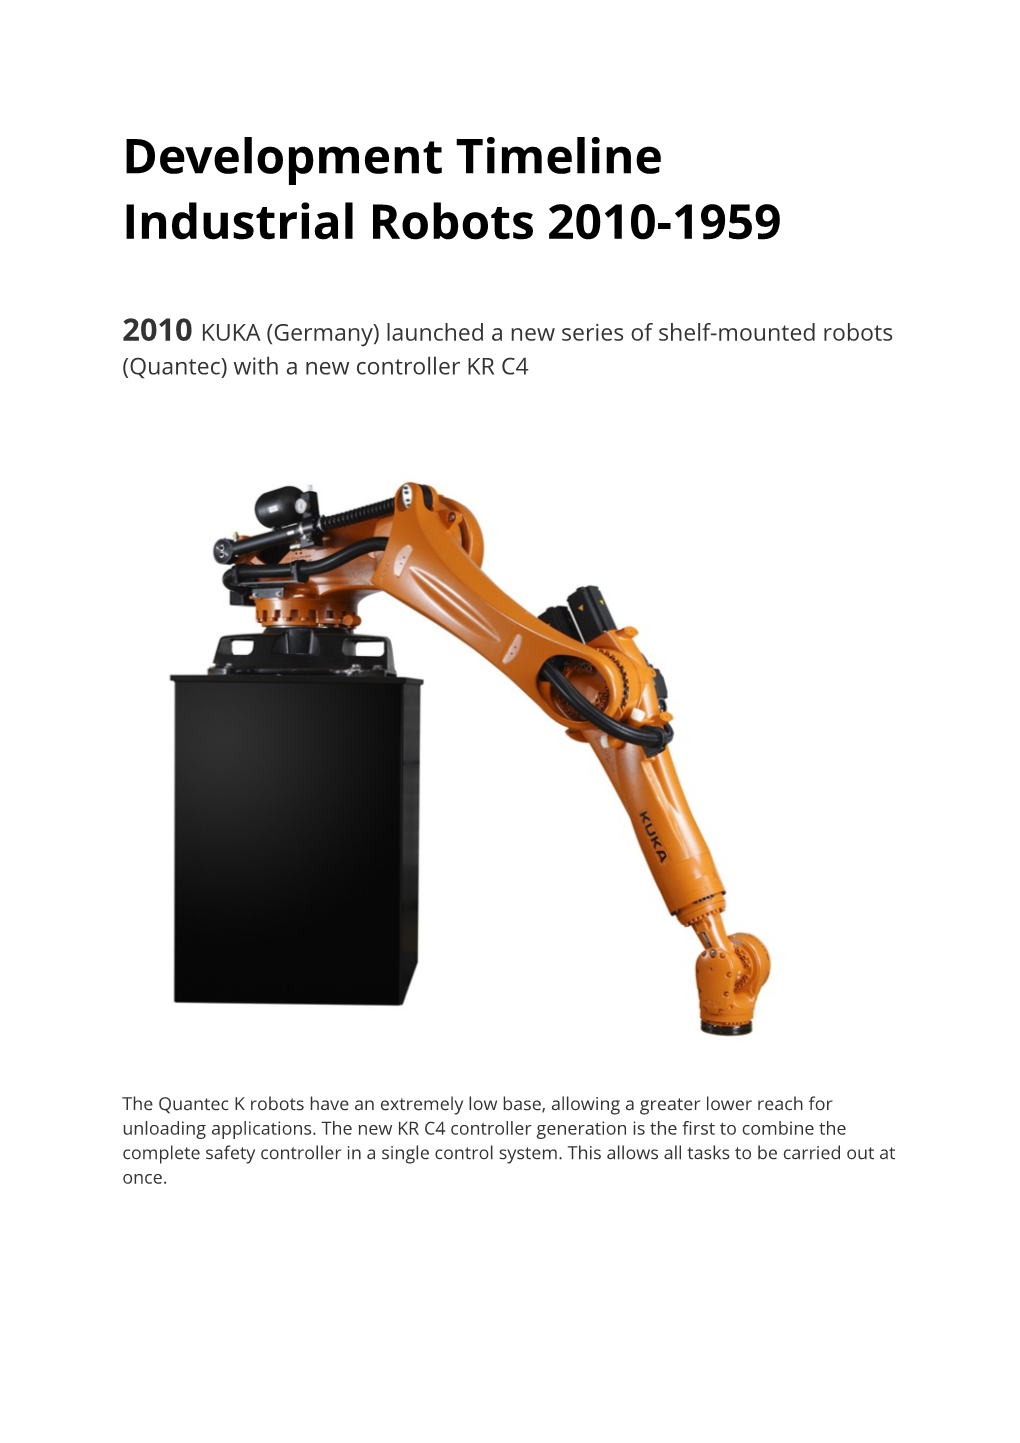 Development Timeline Industrial Robots 2010-1959